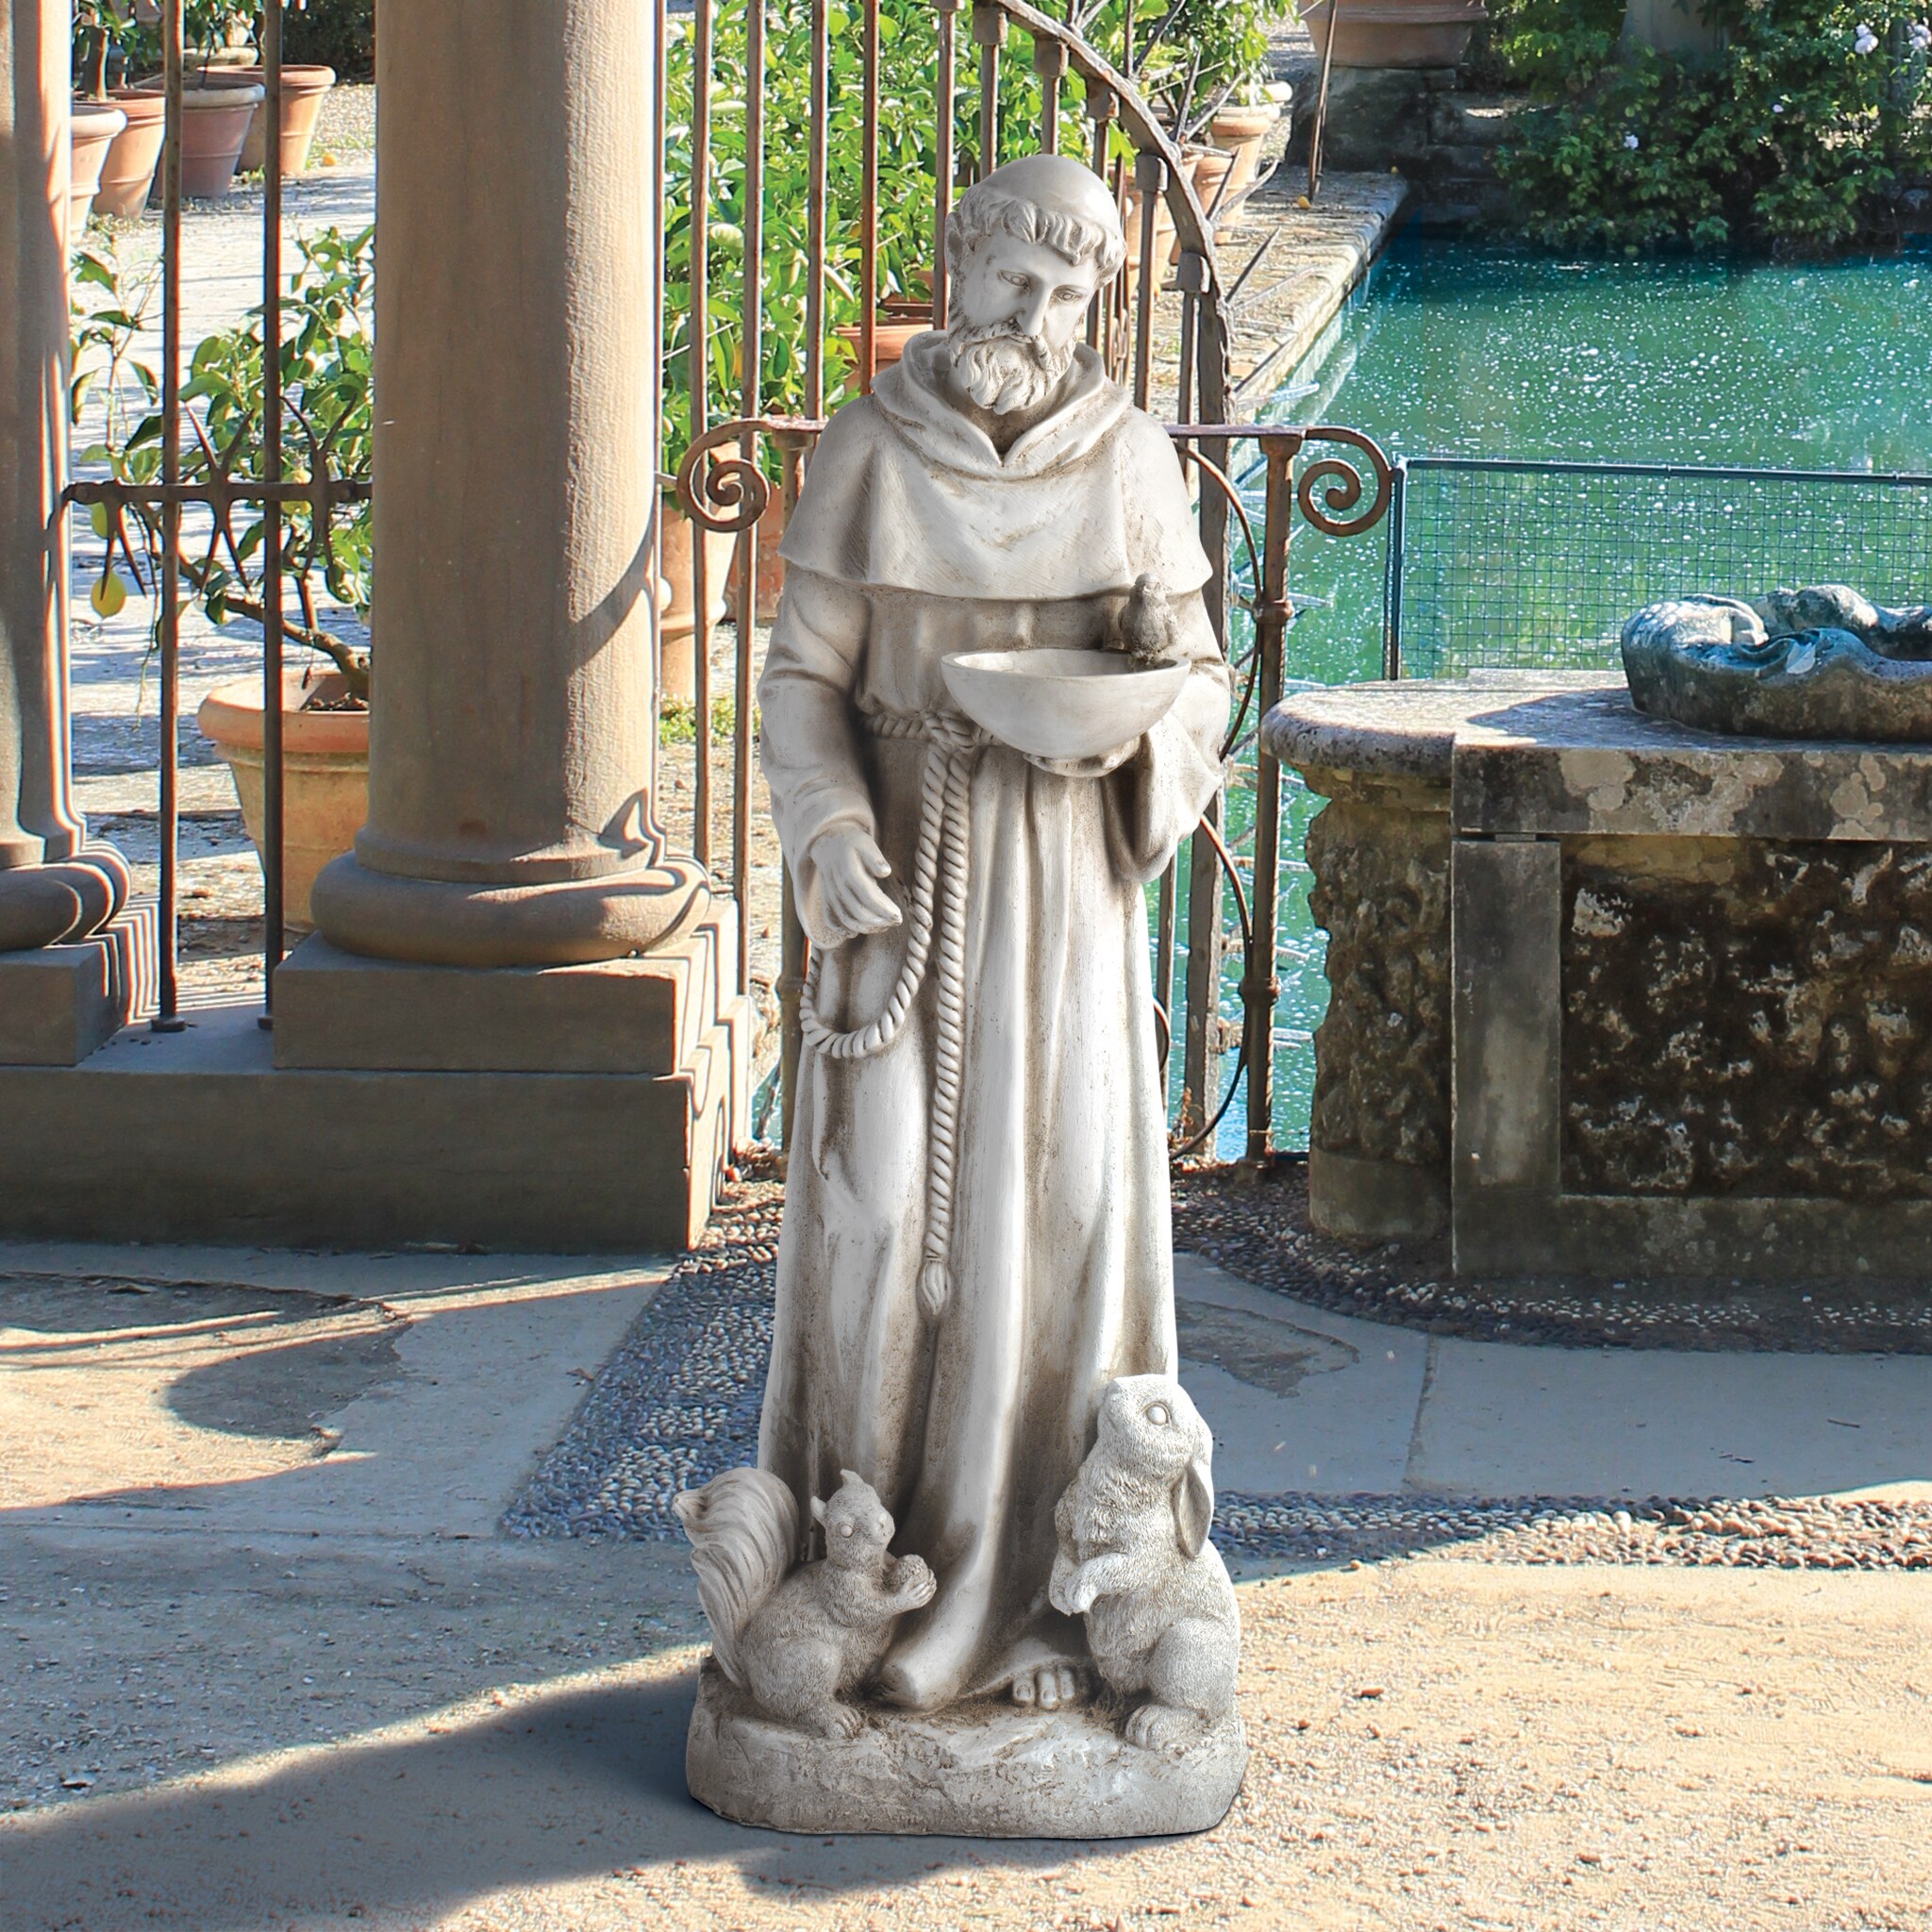 Design Toscano 28-in H x 10-in W Gray Religion Garden Statue